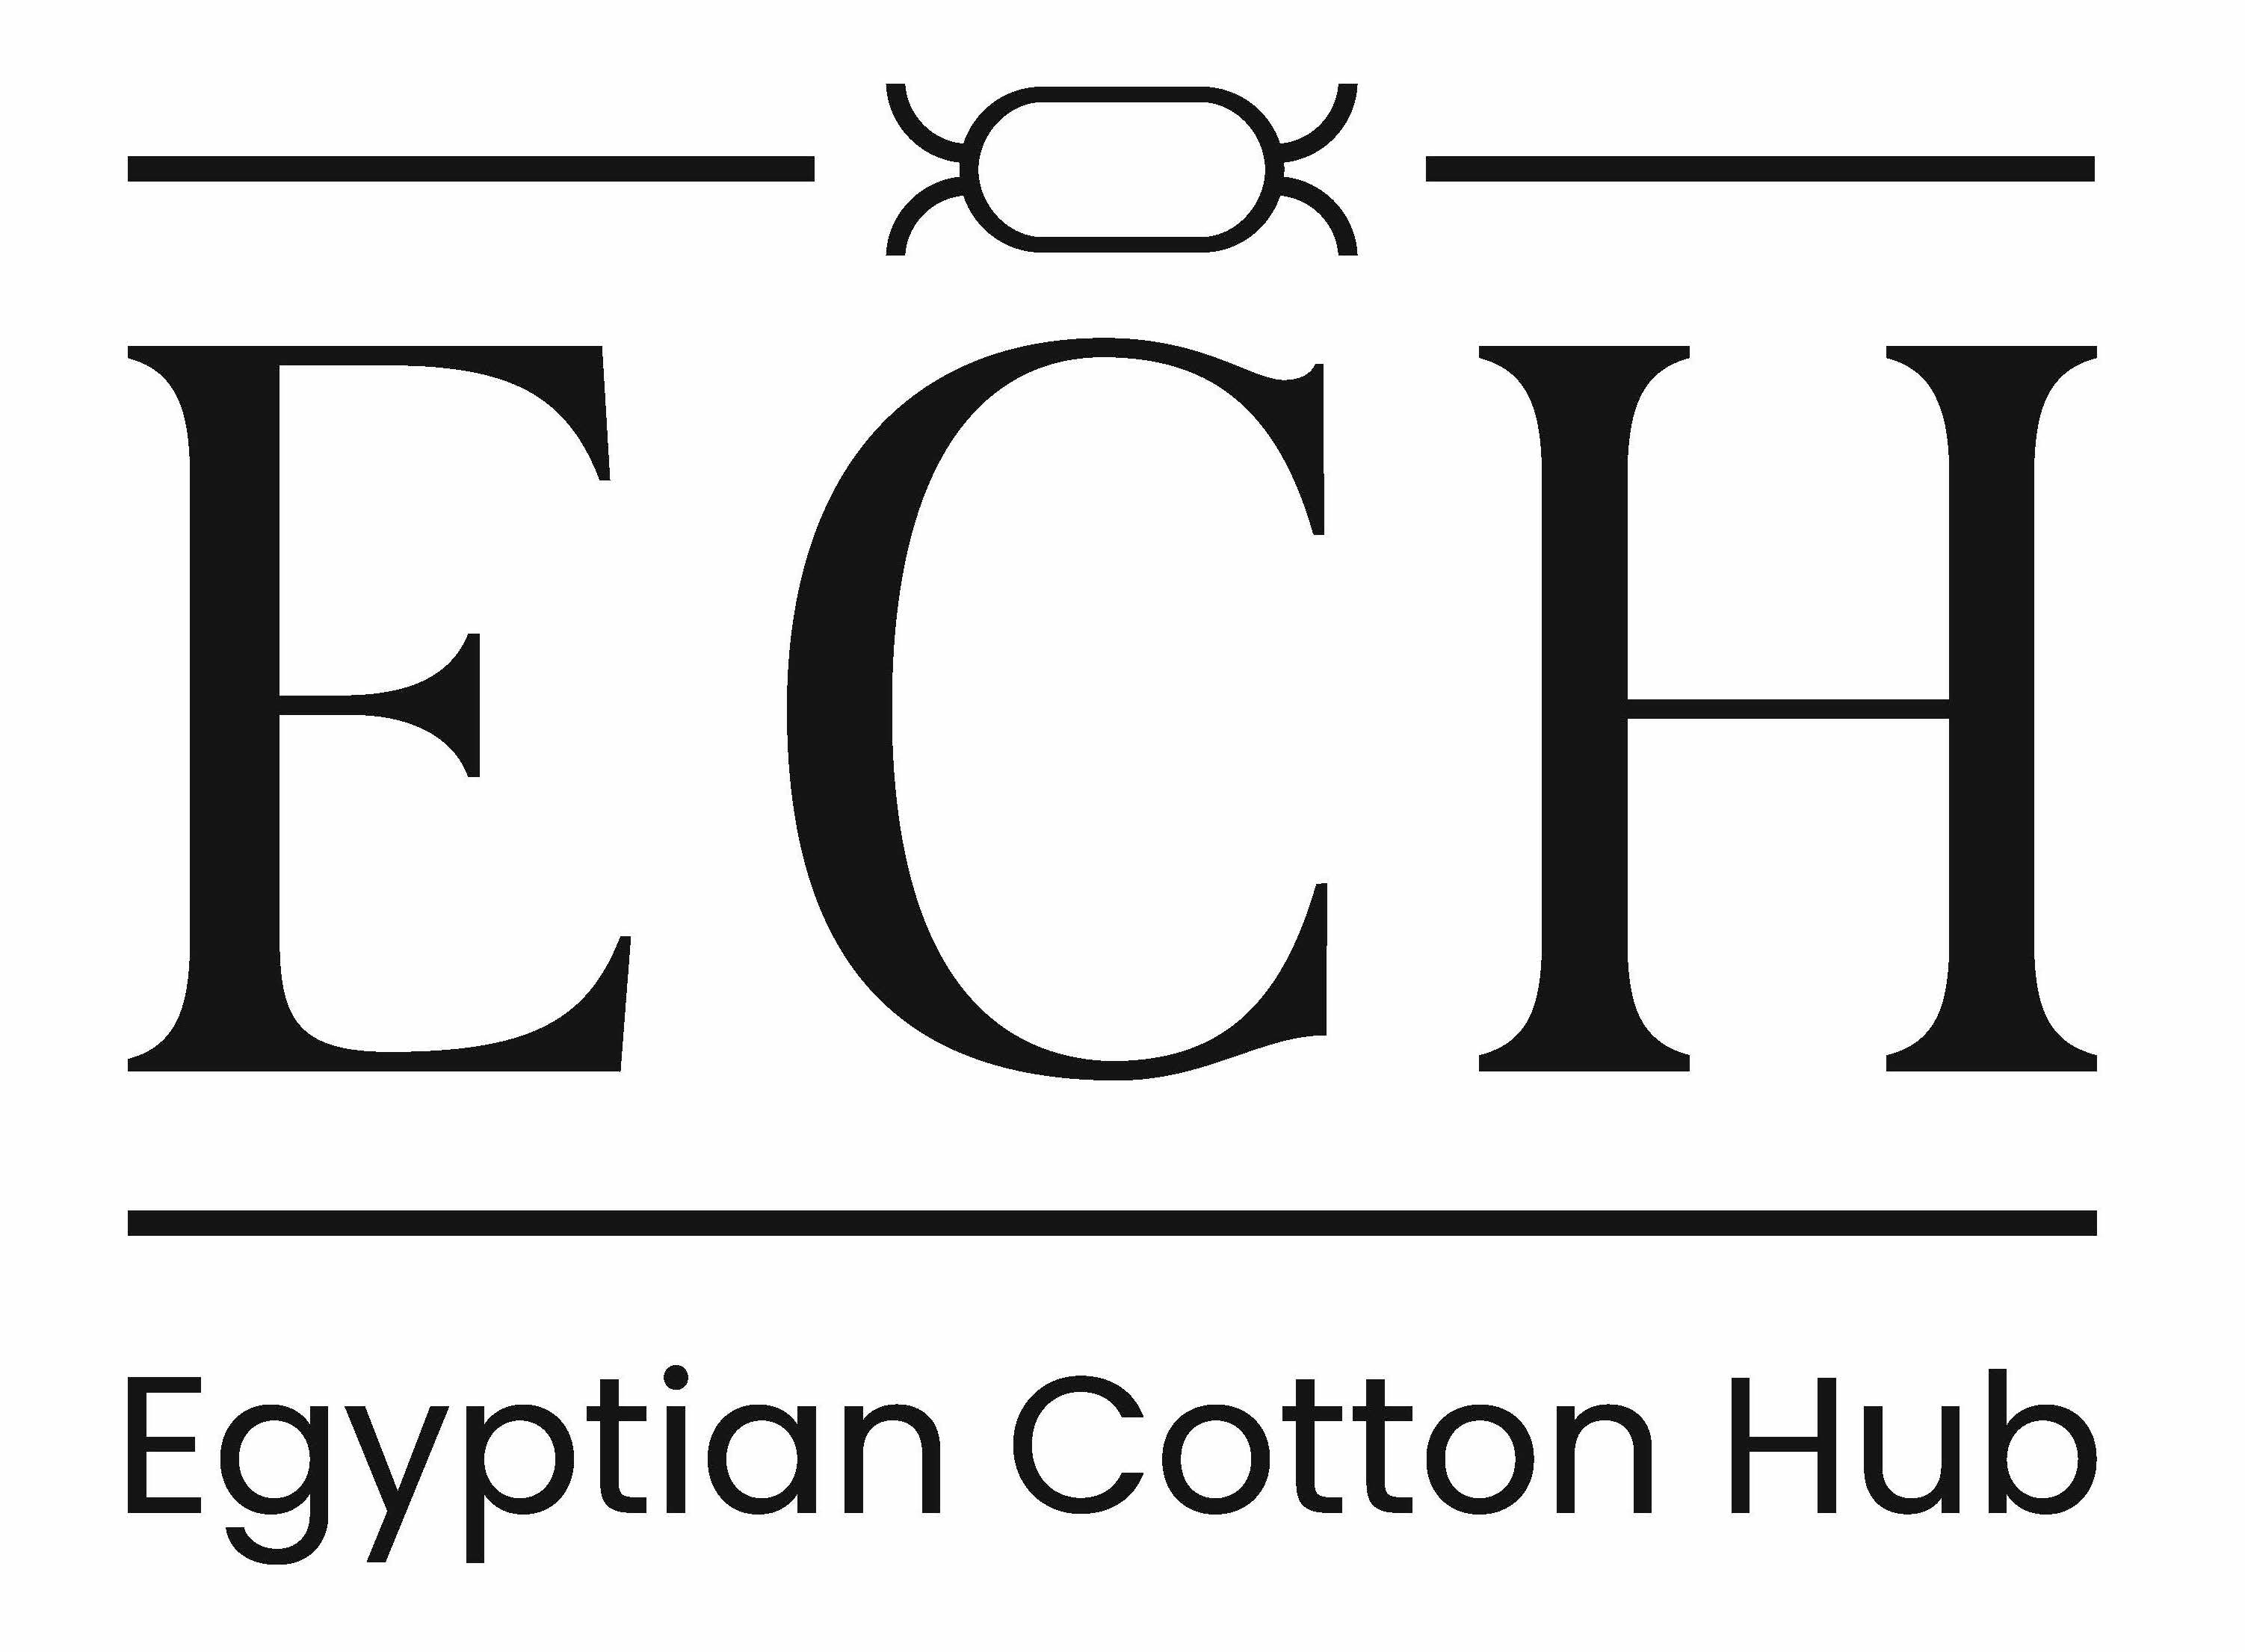 Egyptian Cotton Hub (ECH)